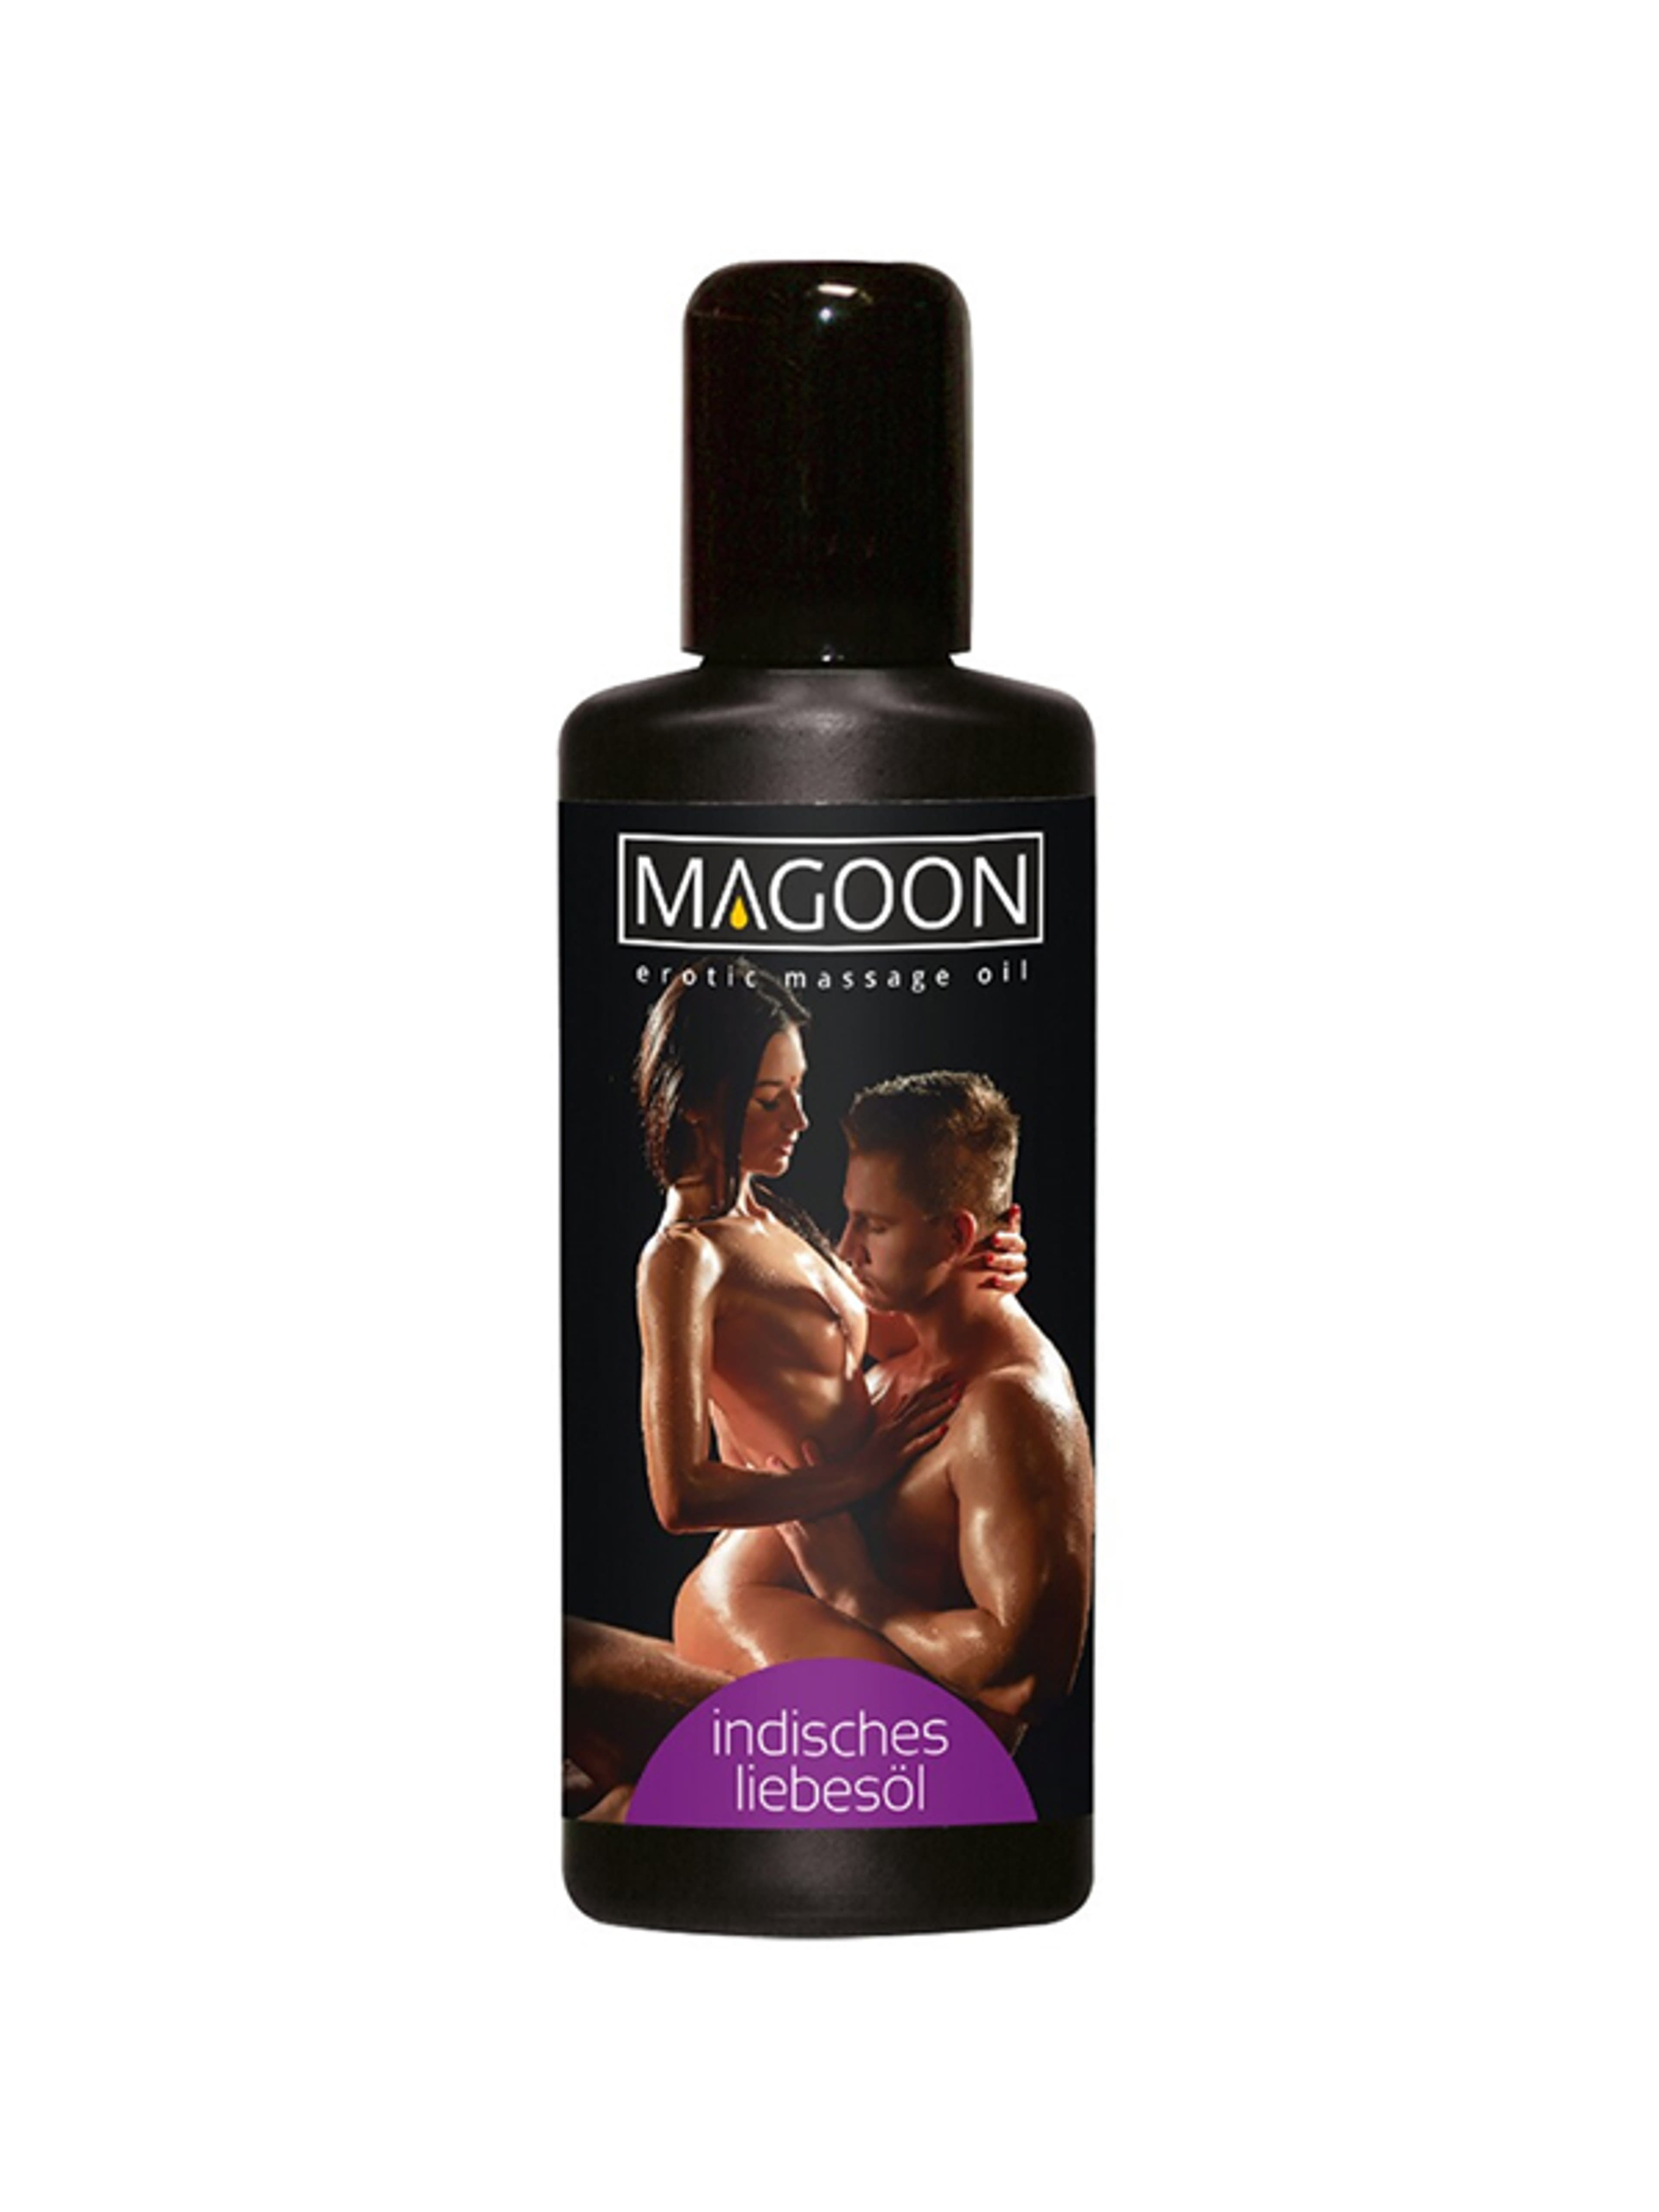 Magoon indiai szerelemolaj - 50 ml-1